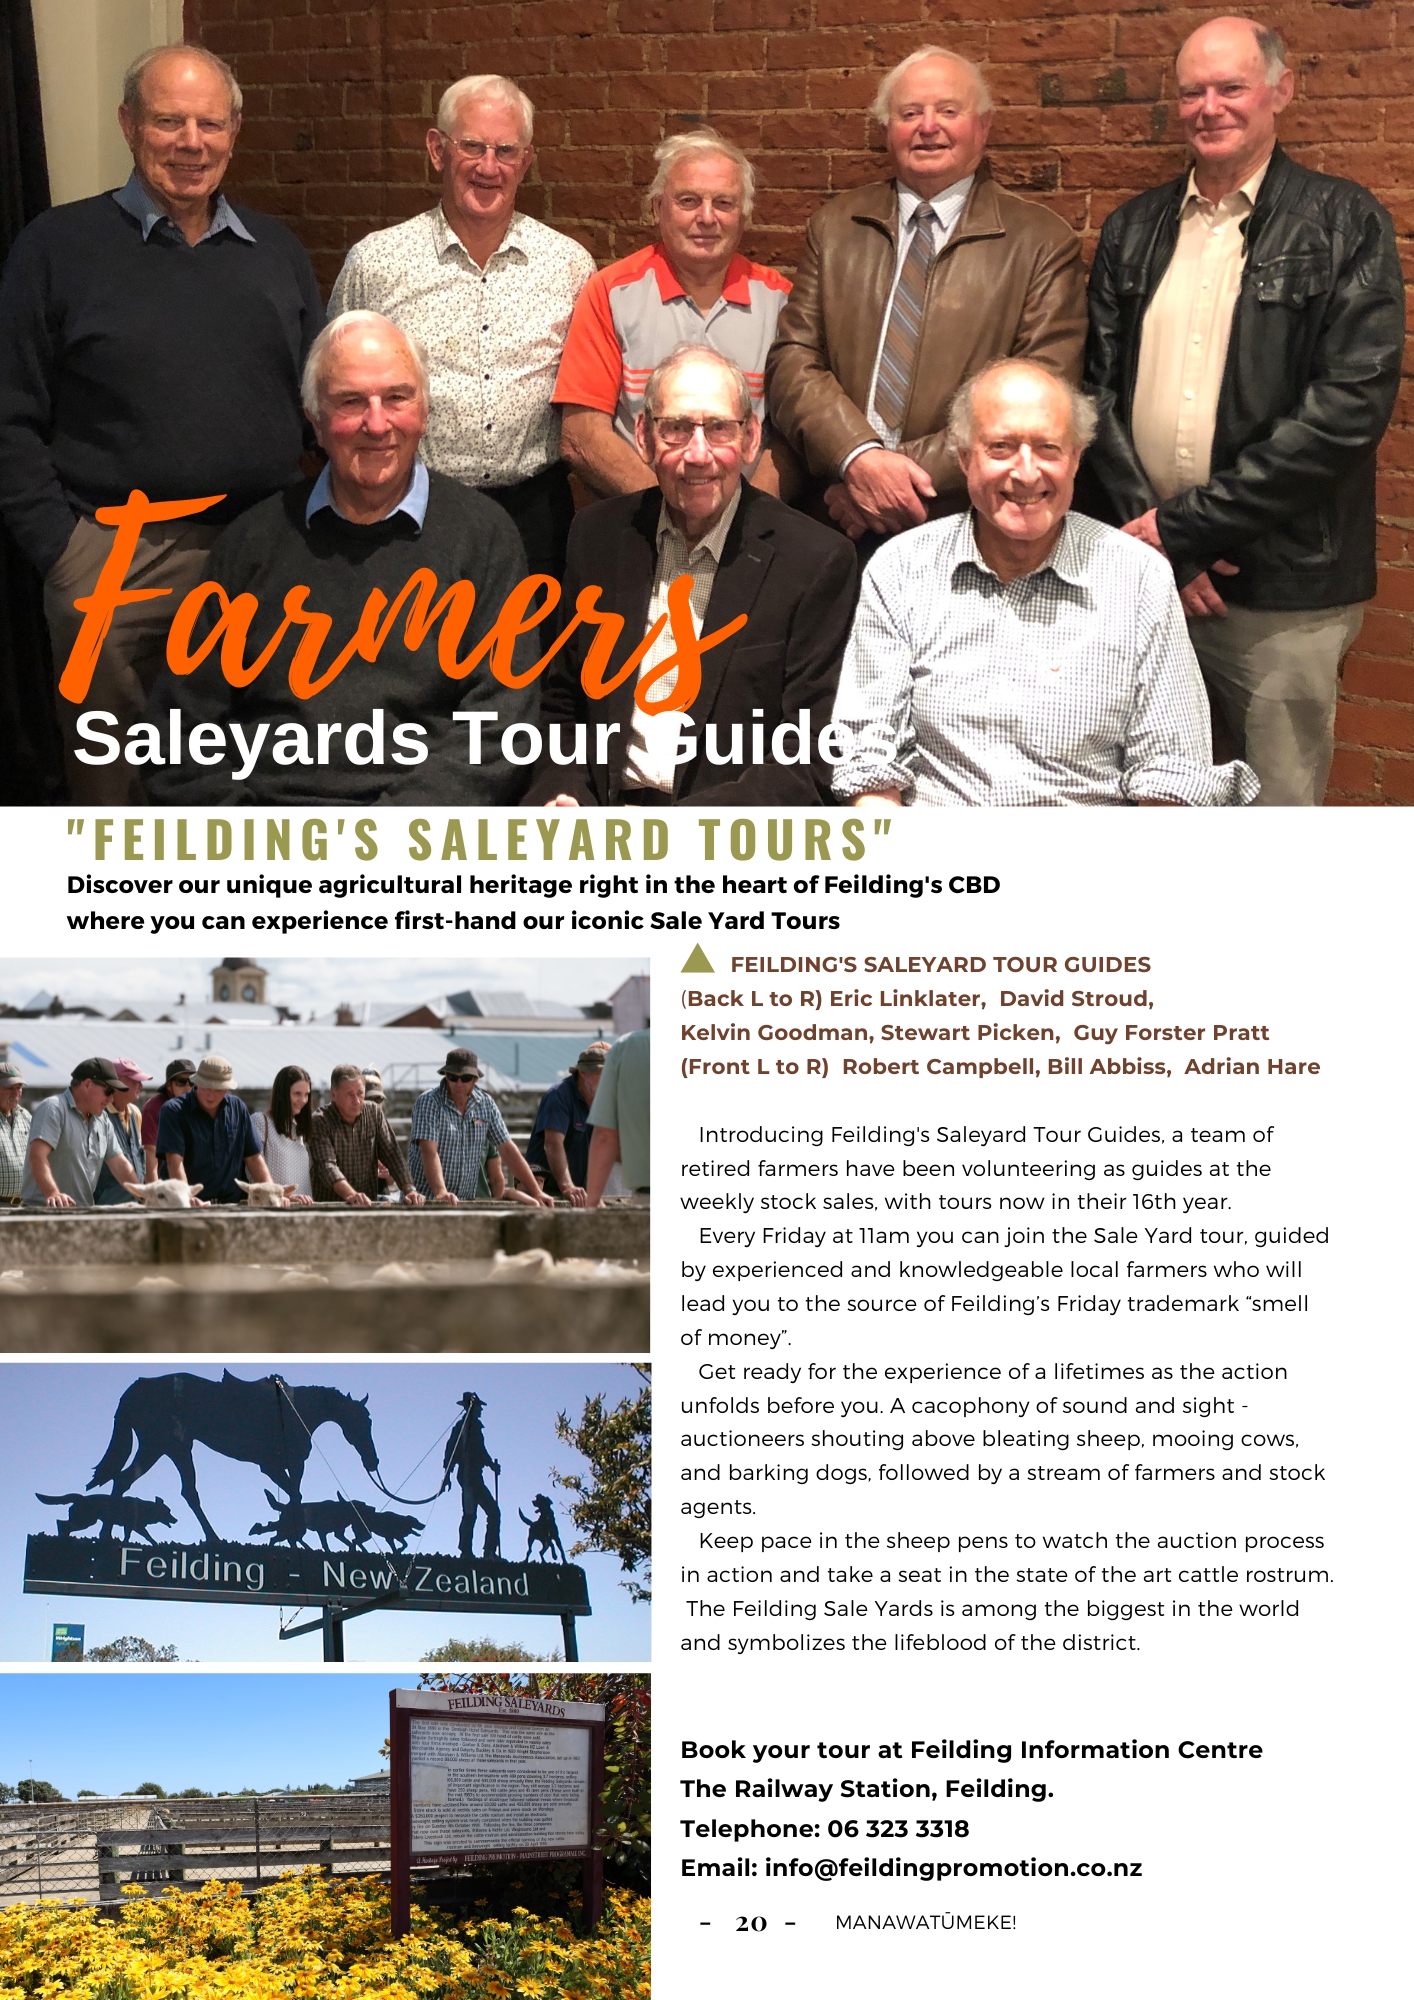 Feilding Saleyard Tours